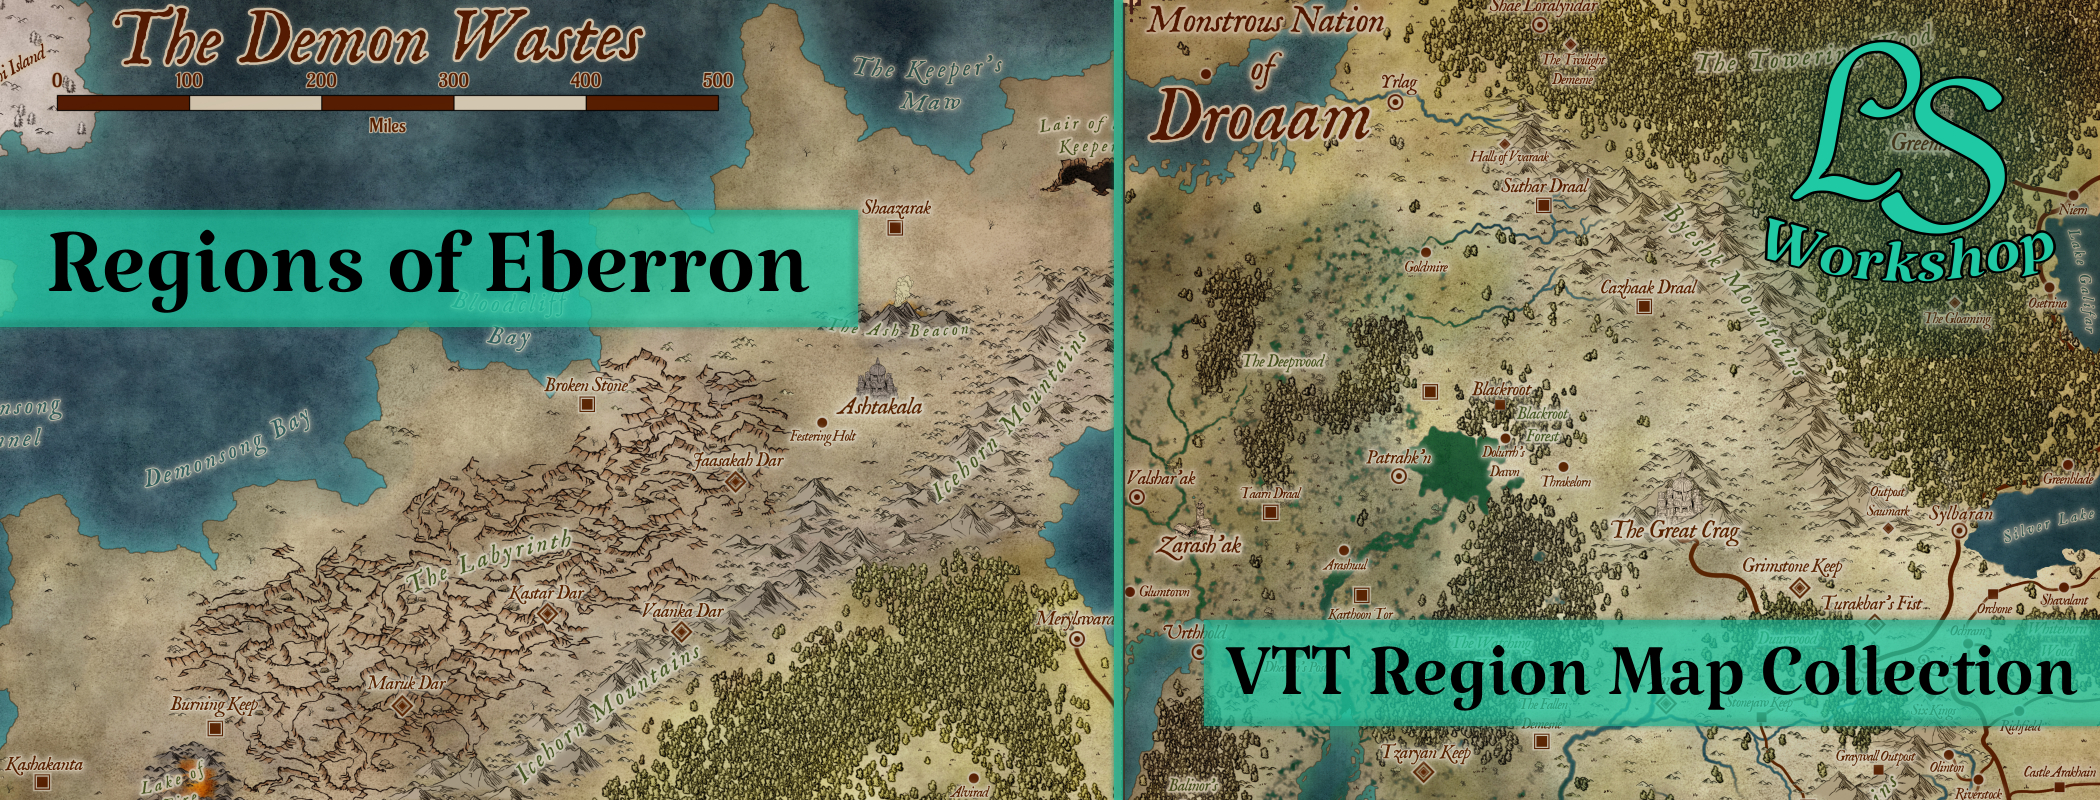 Eberron Region Map Collection